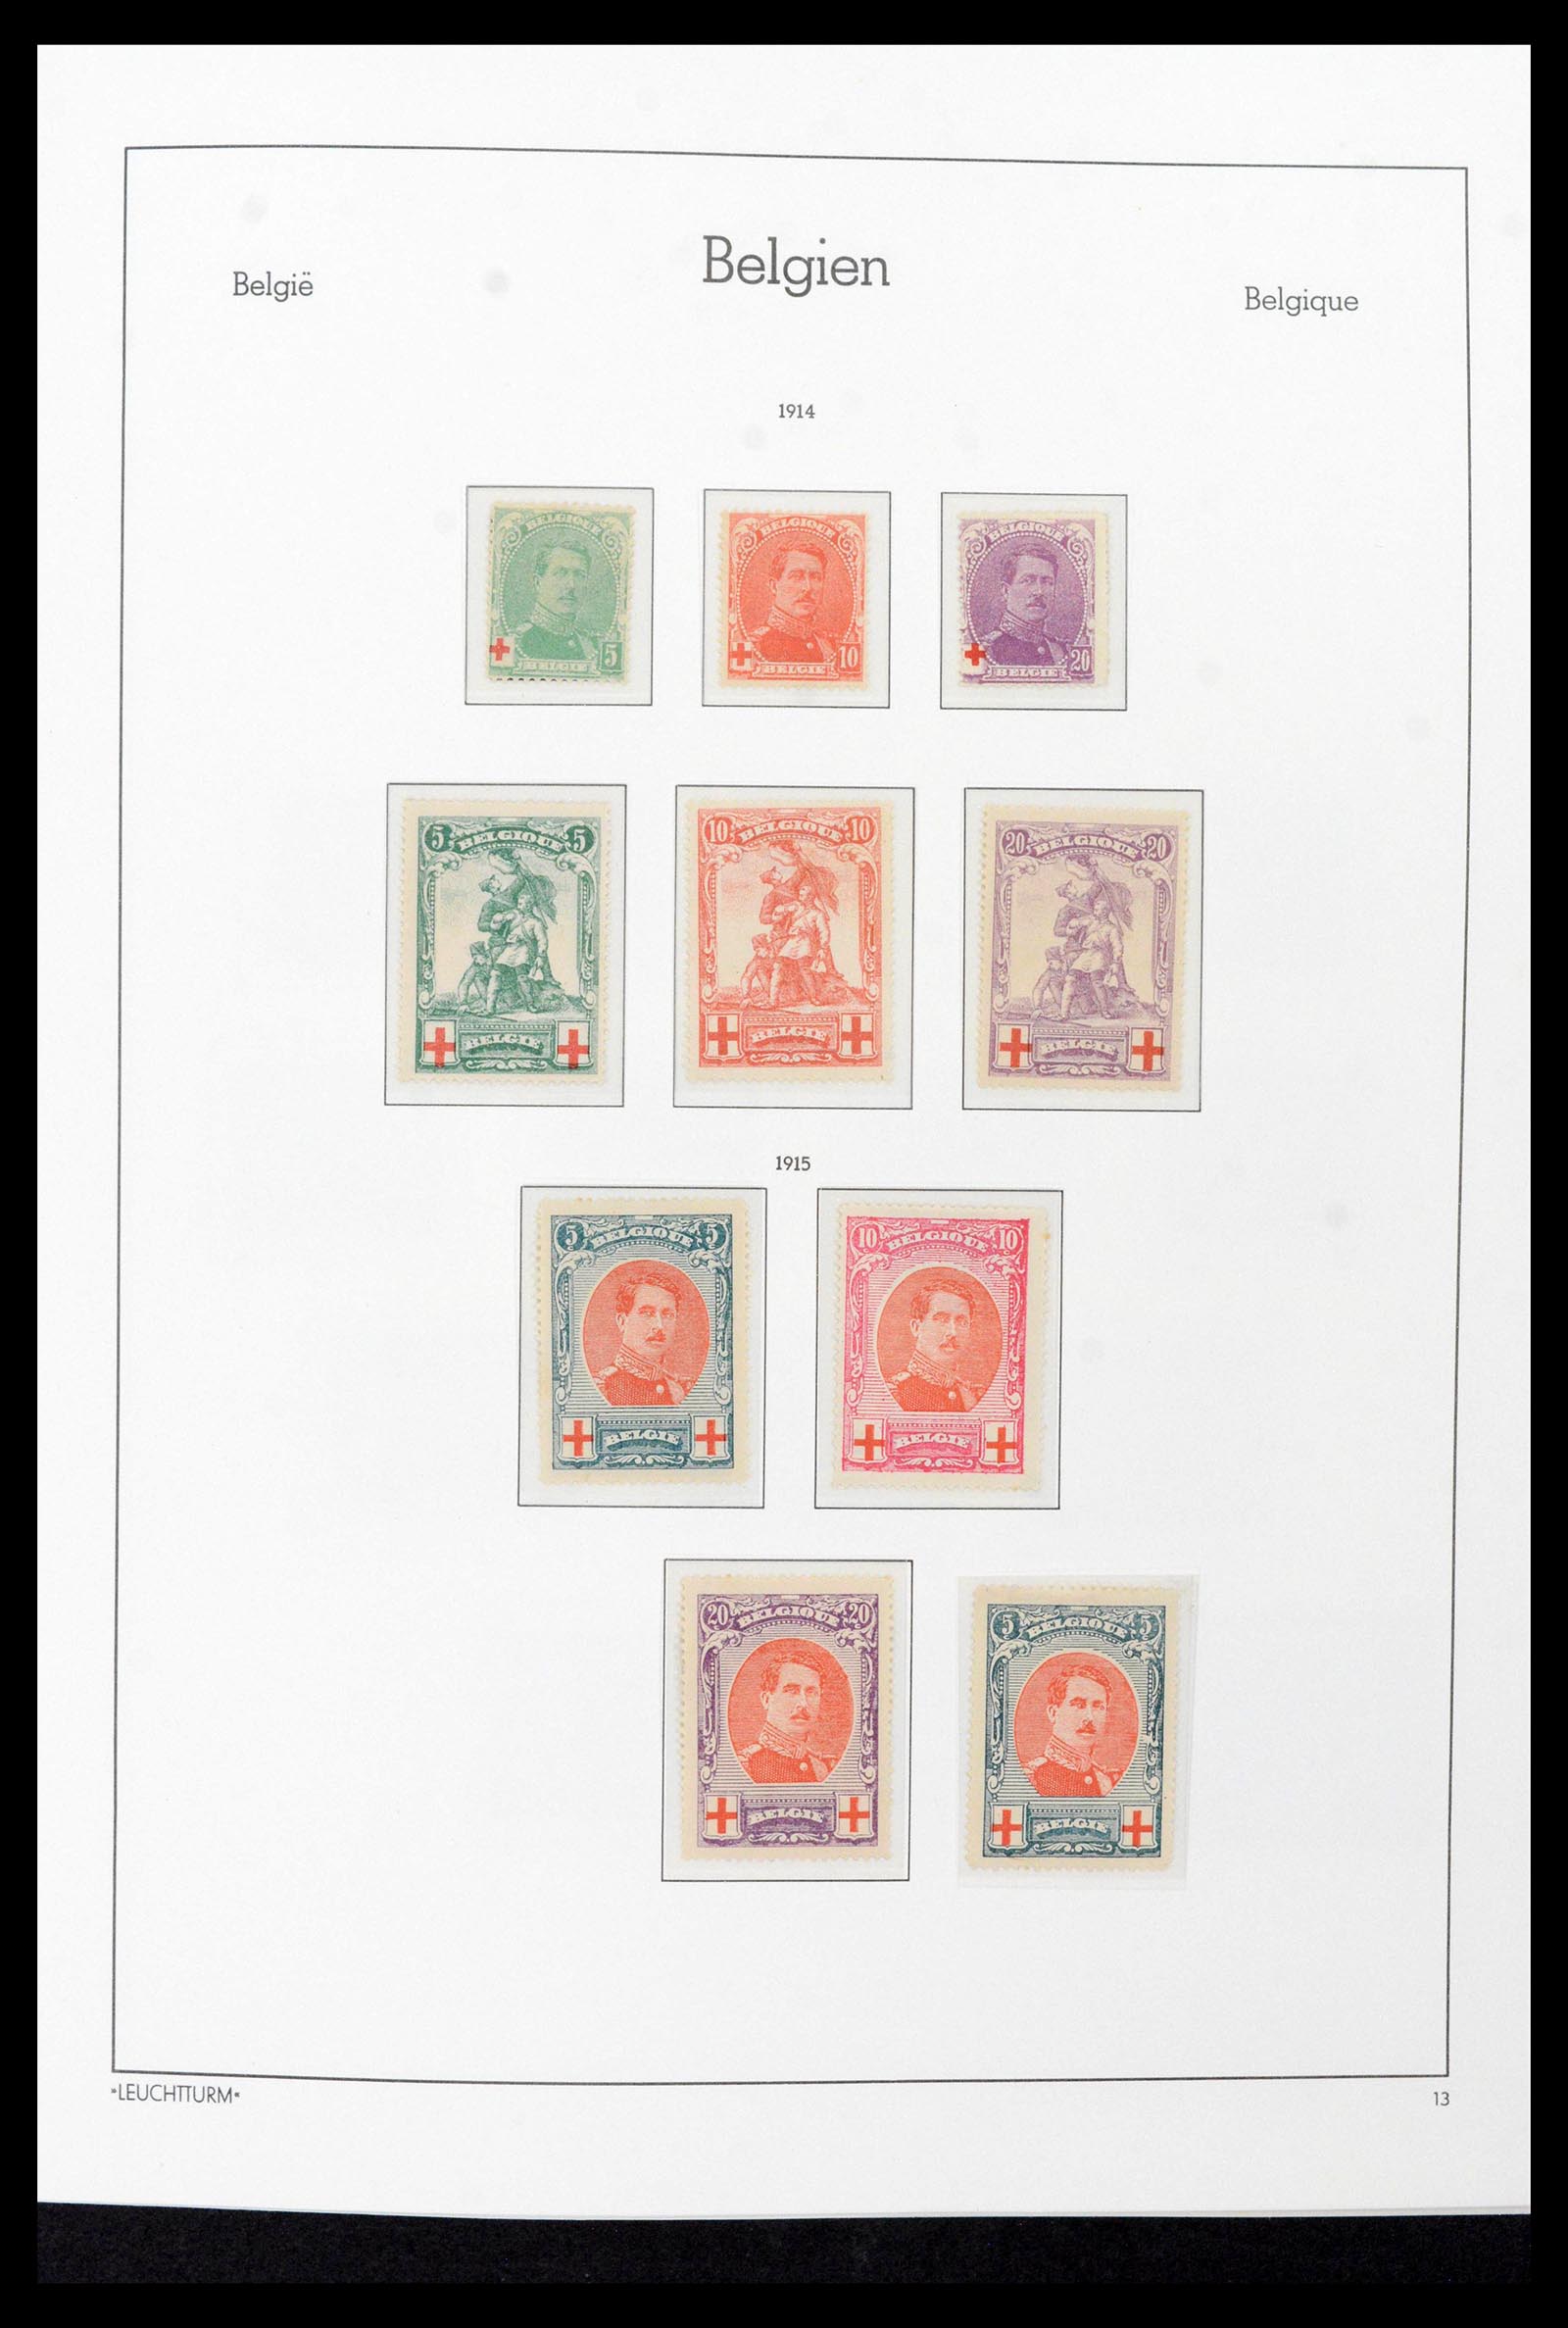 39137 0018 - Stamp collection 39137 Belgium 1849-2002.